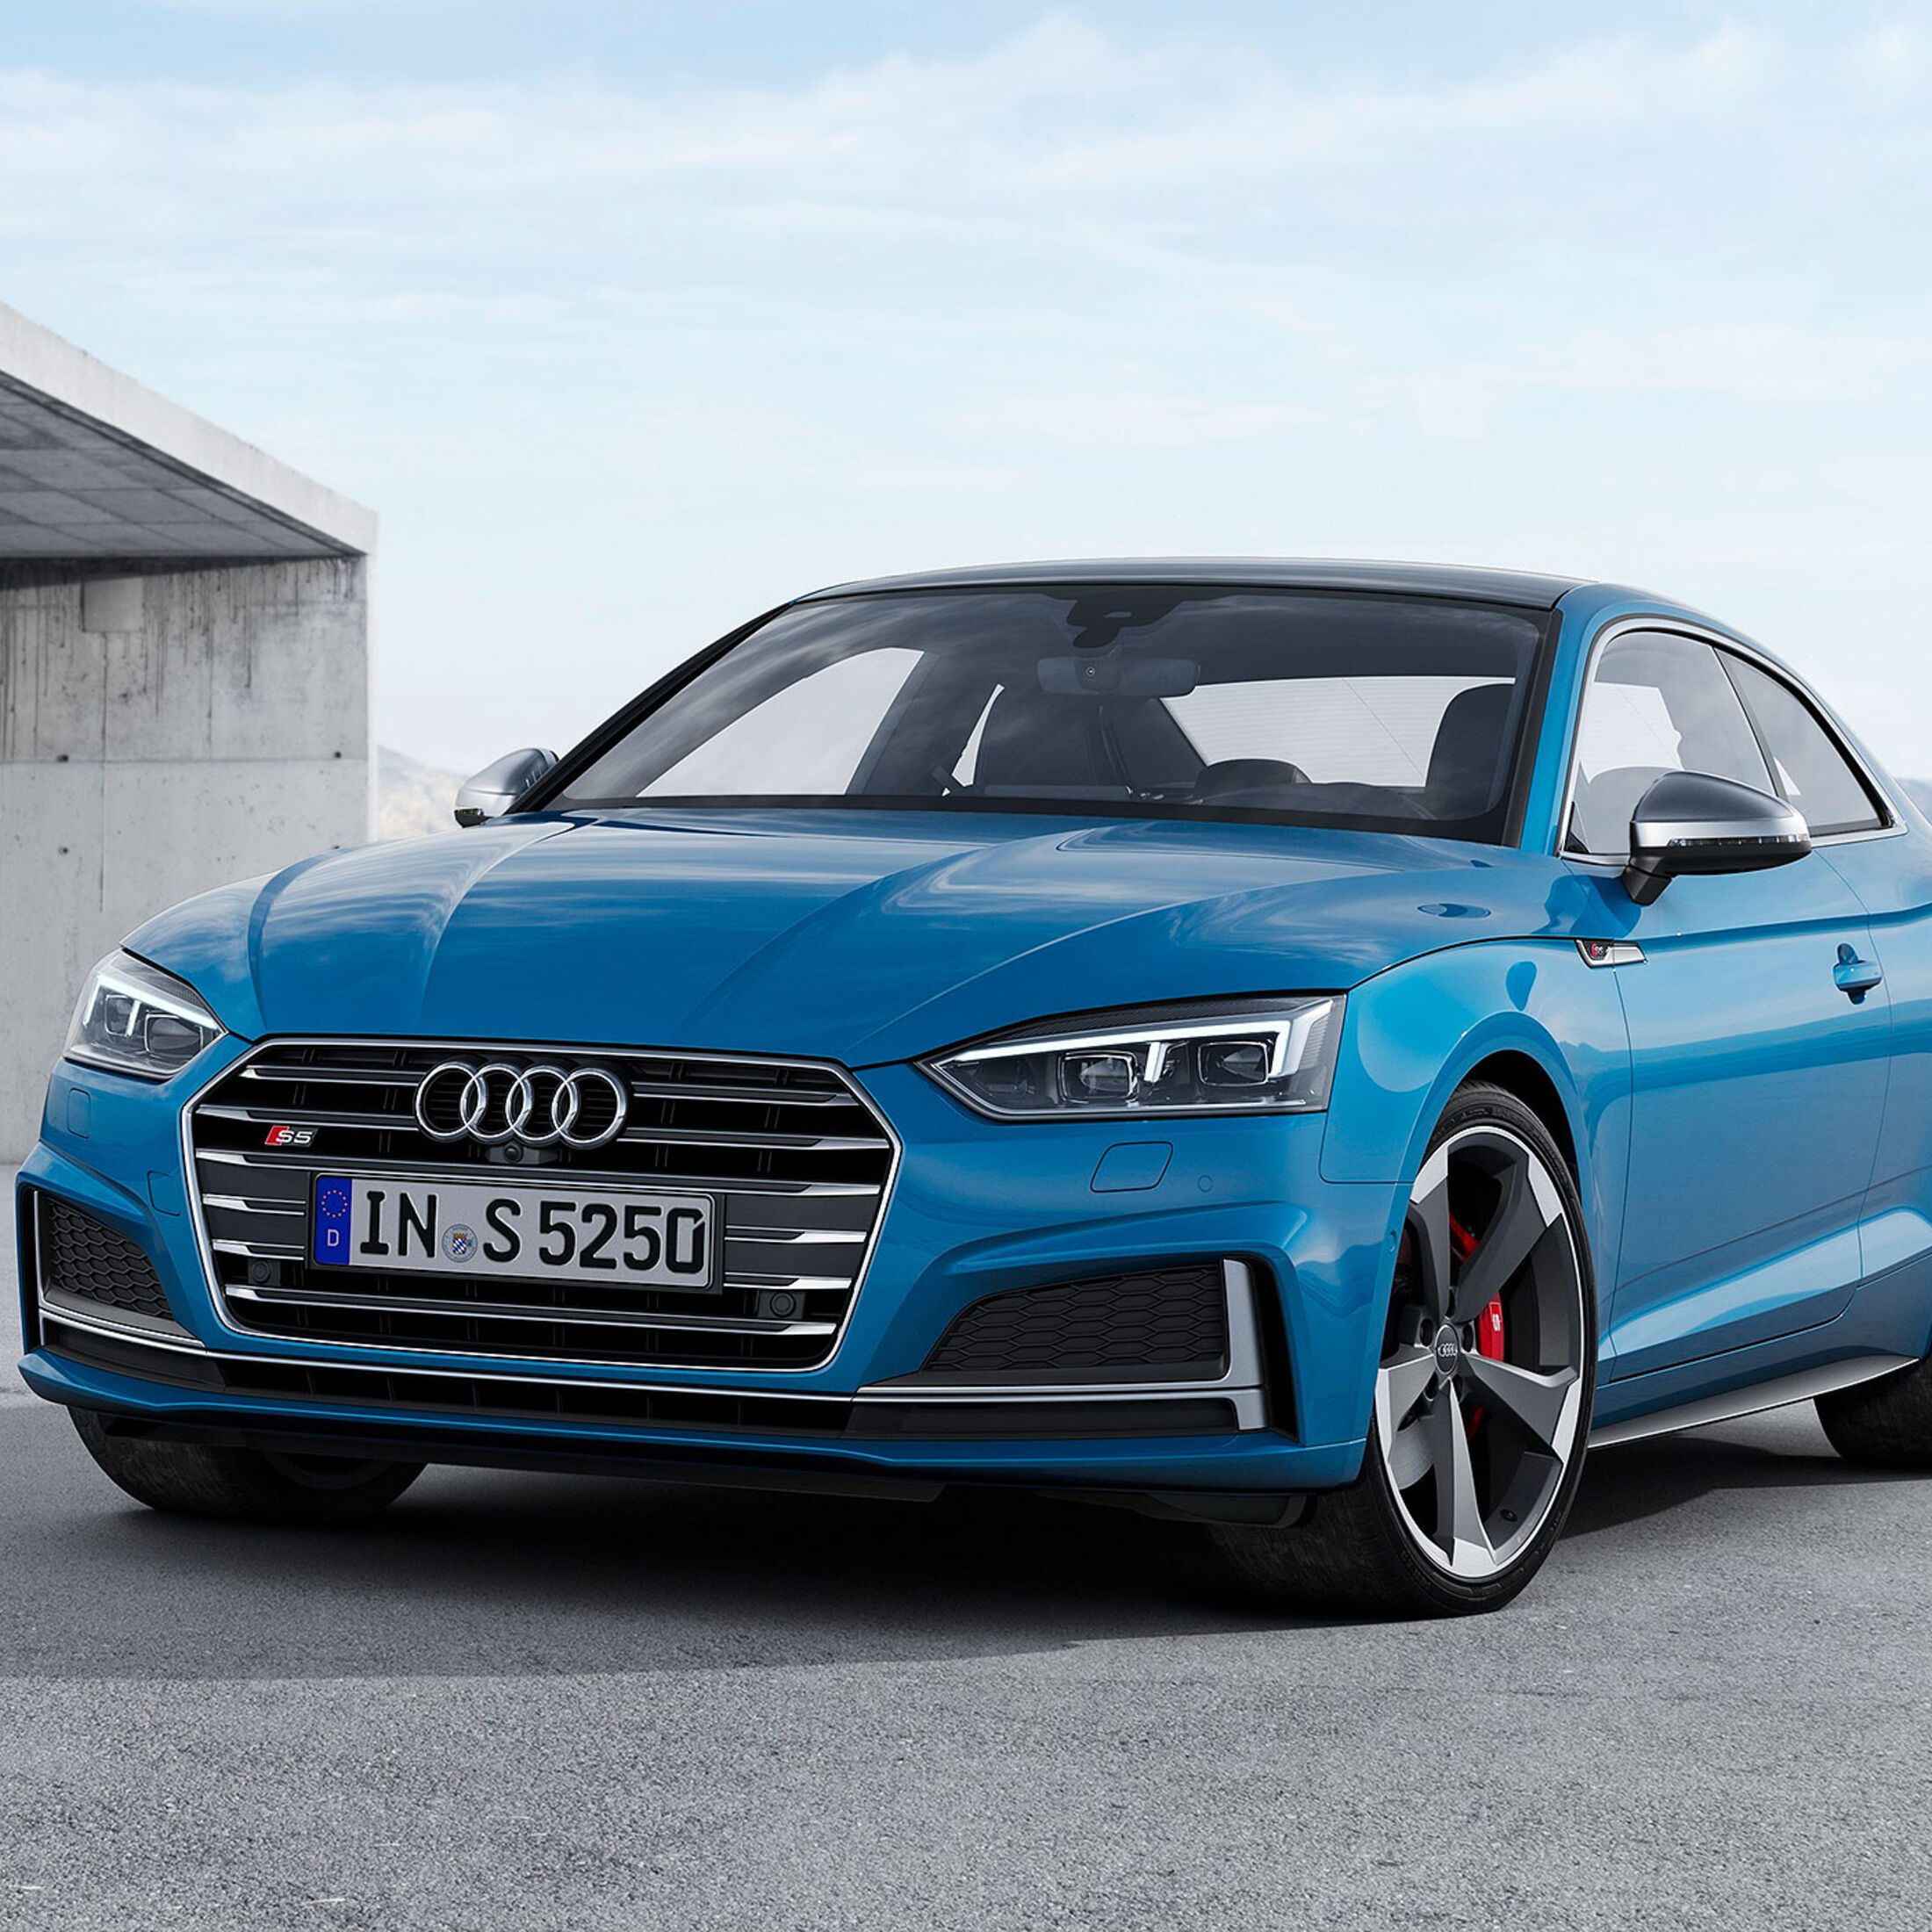 https://imgr1.auto-motor-und-sport.de/Audi-S5-TDI-jsonLd1x1-31449d3d-1549330.jpg